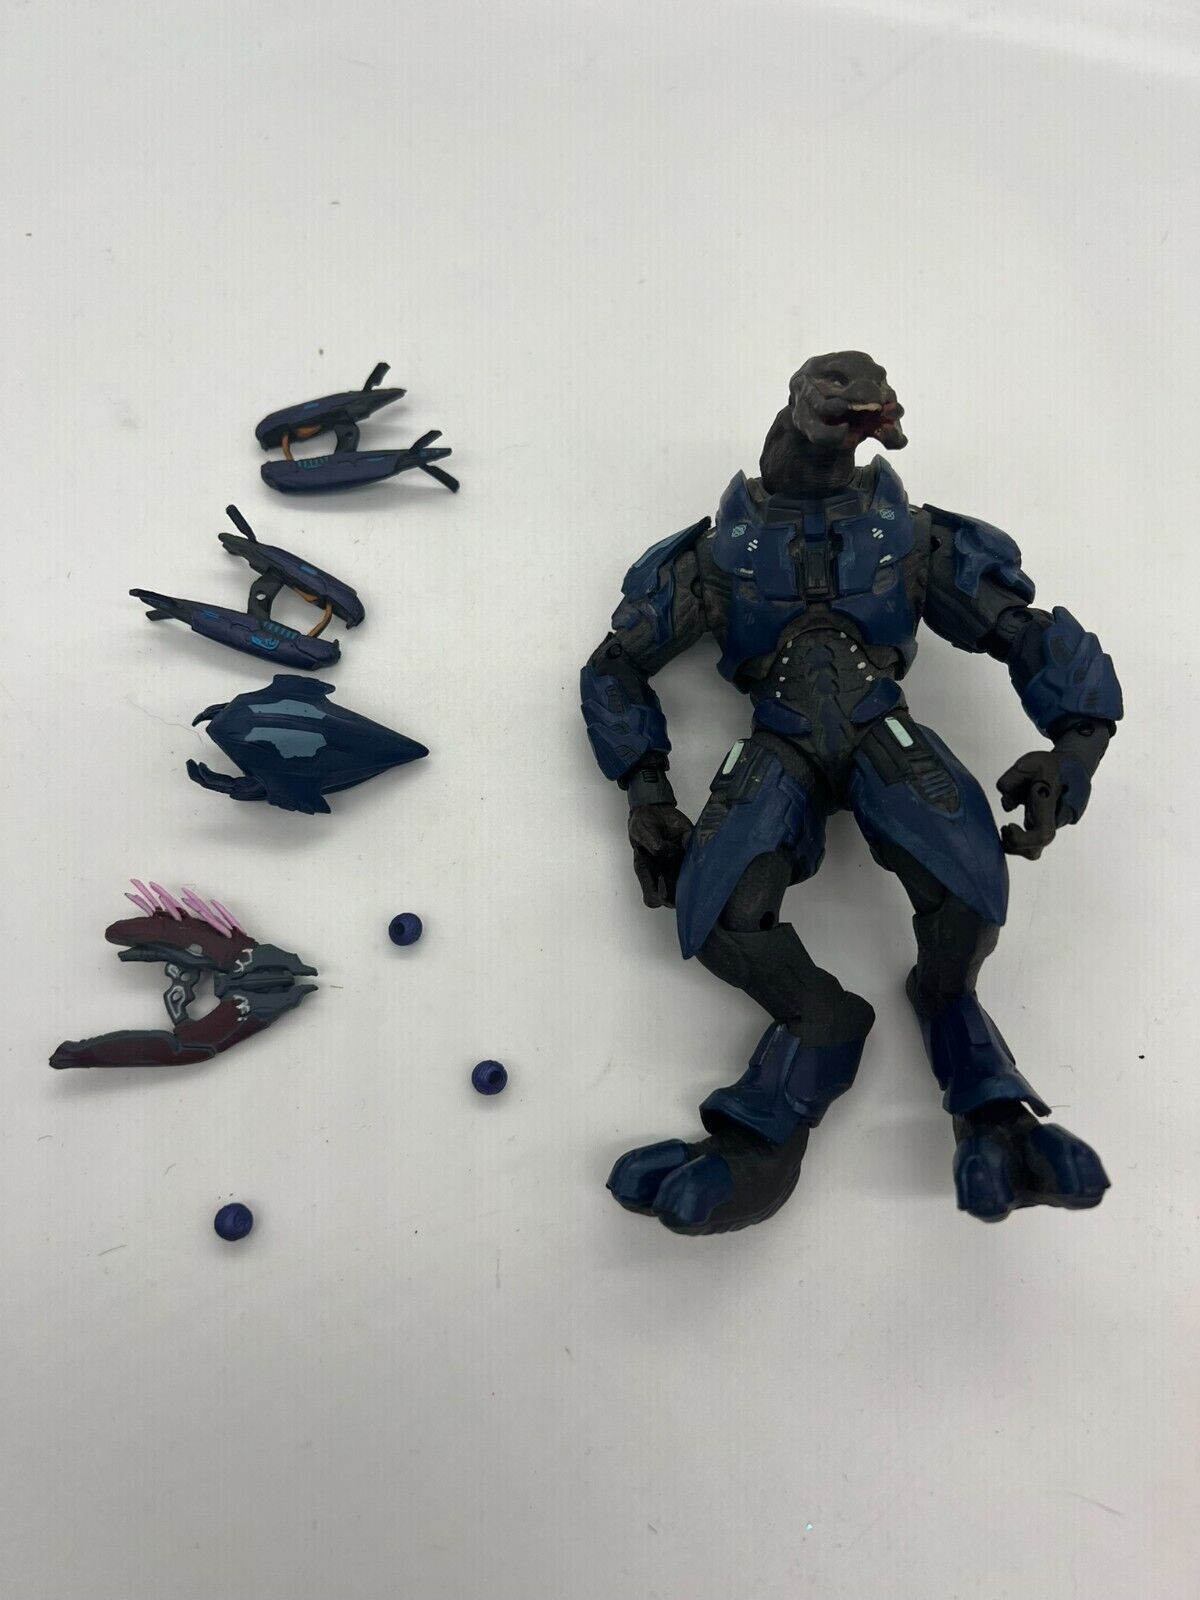 Halo Reach Series 1 Elite Minor Blue McFarlane Figure With multiple accessories